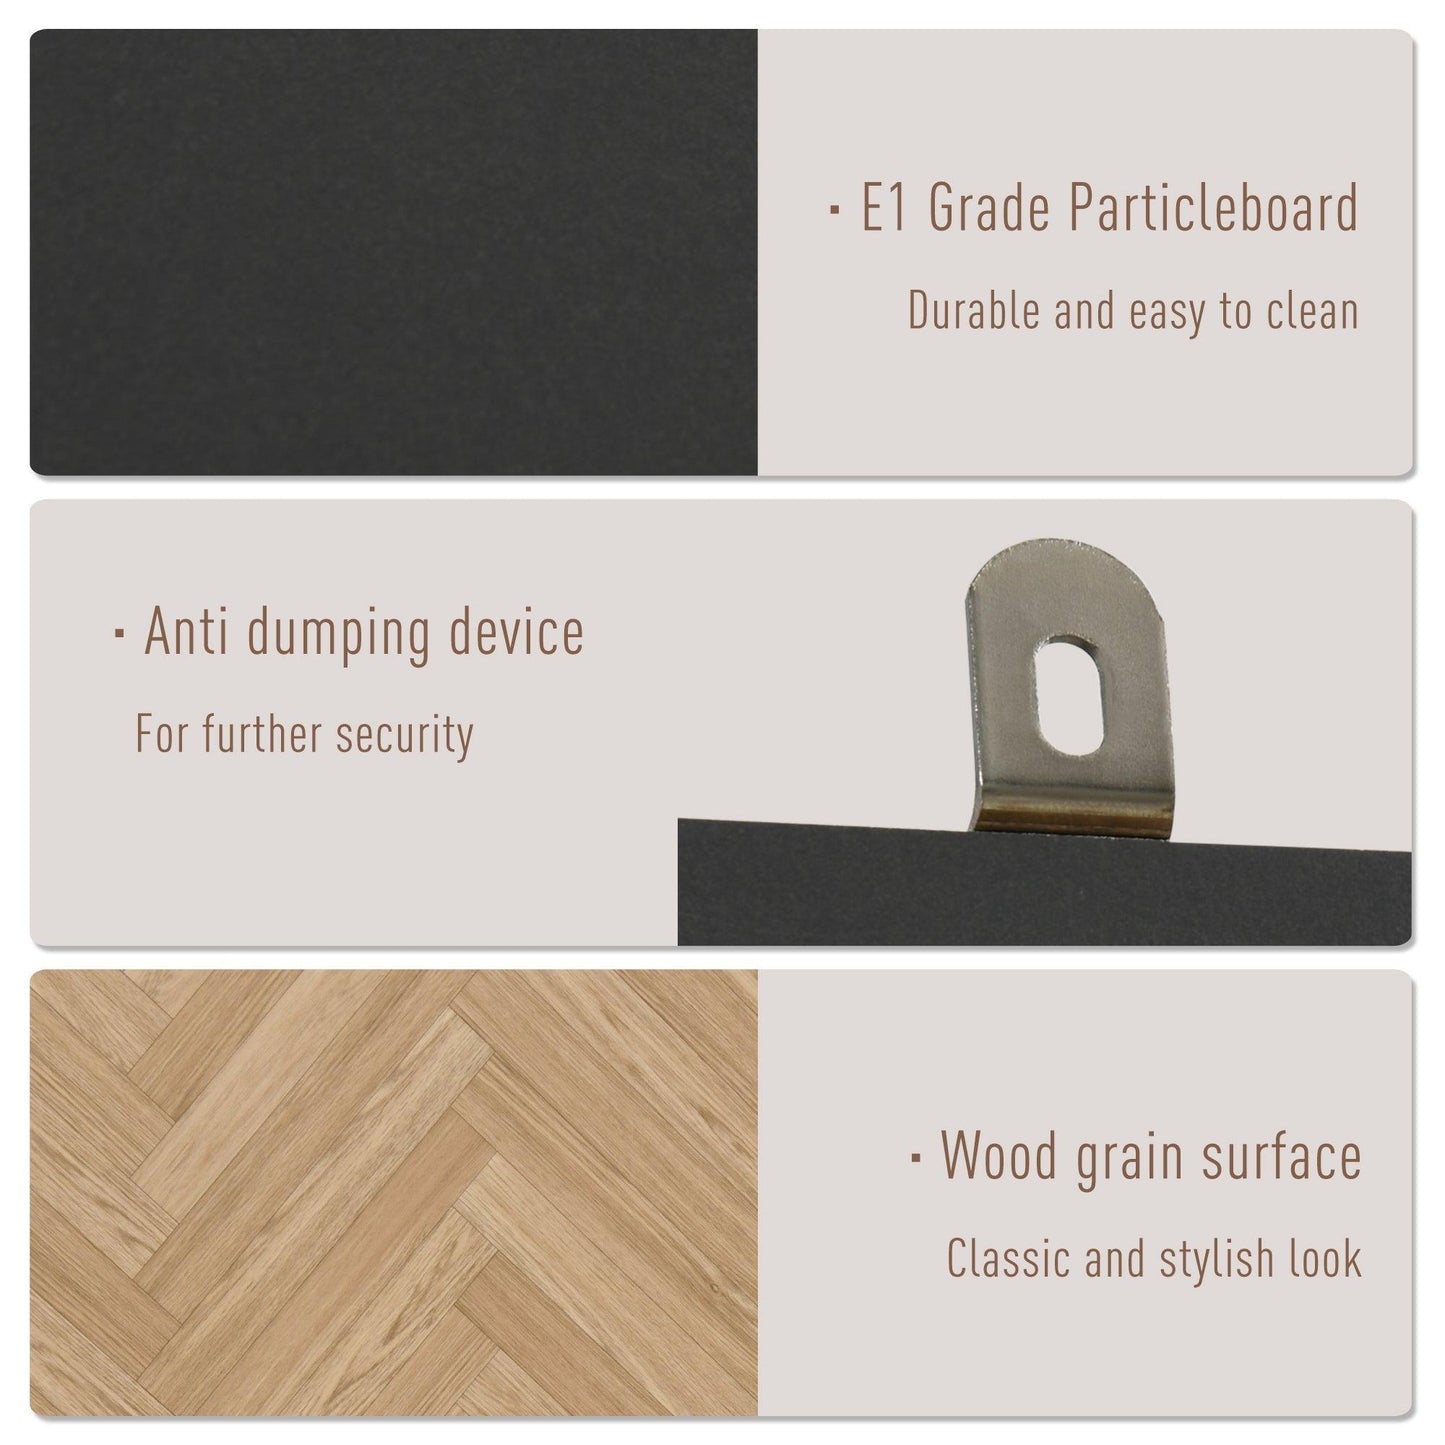 HOMCOM Wardrobe Cabinet: Wood Grain, Shelf, Rod, 2 Drawers - ALL4U RETAILER LTD